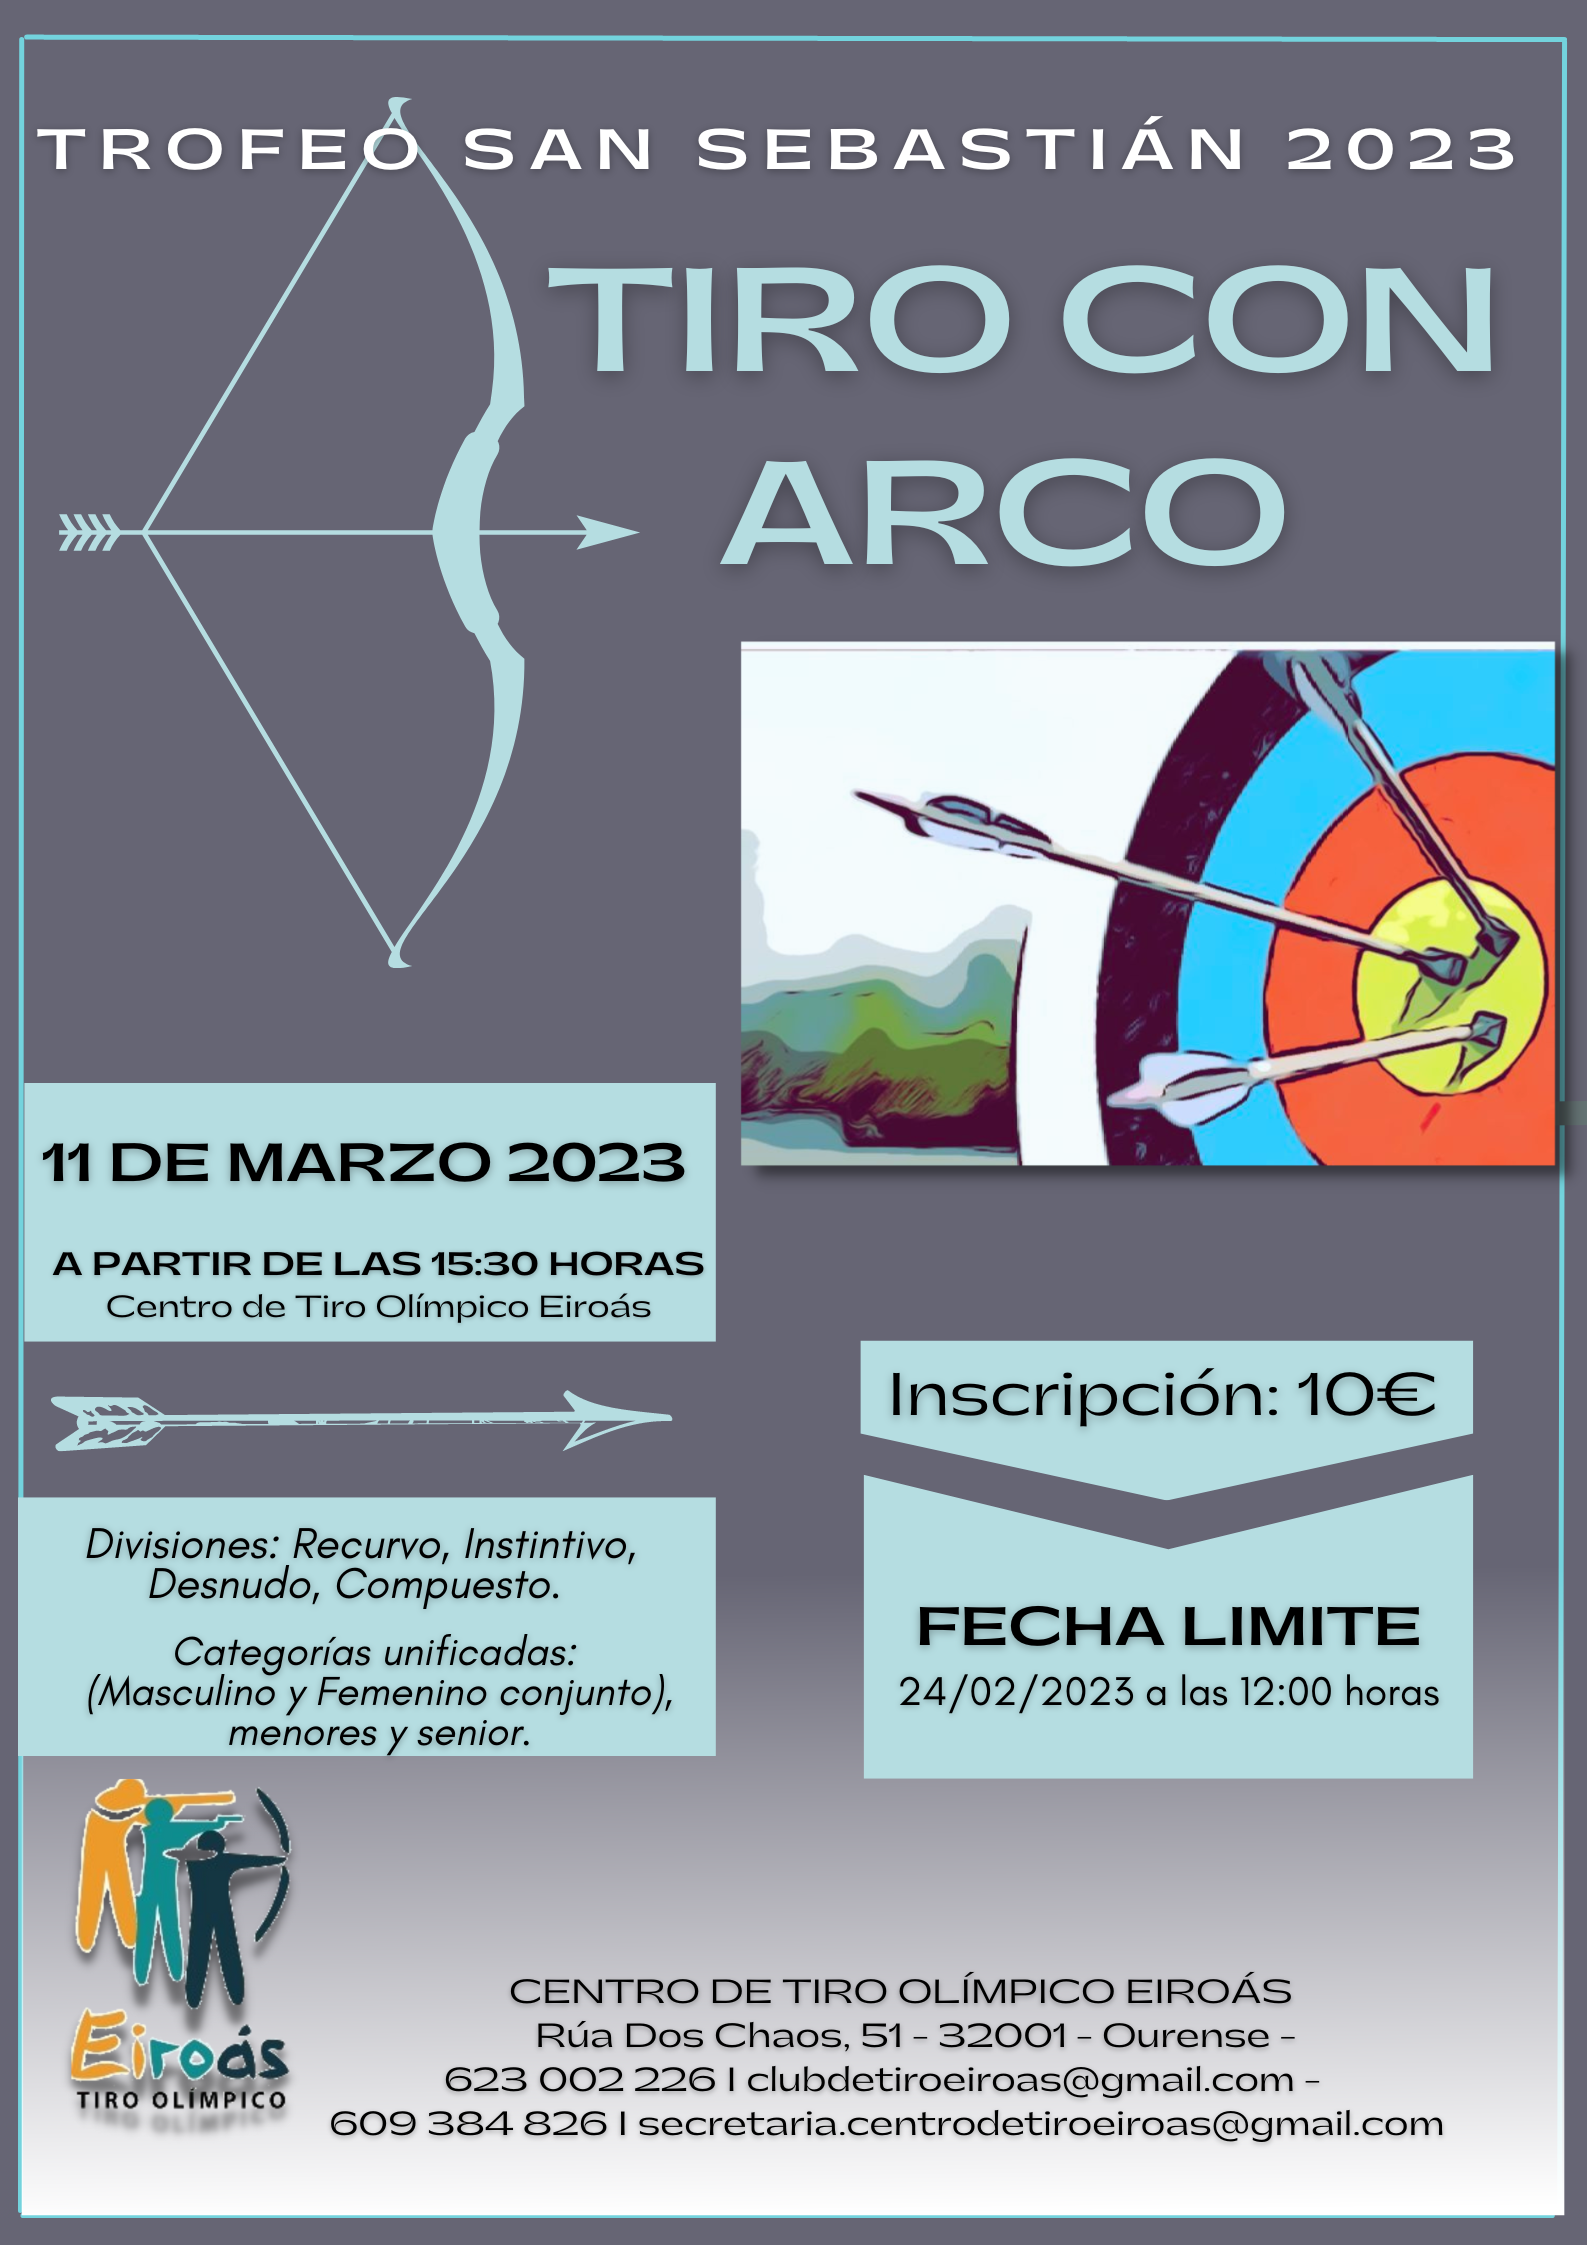 TROFEO SAN SEBASTIÁN 2023 - ARCO